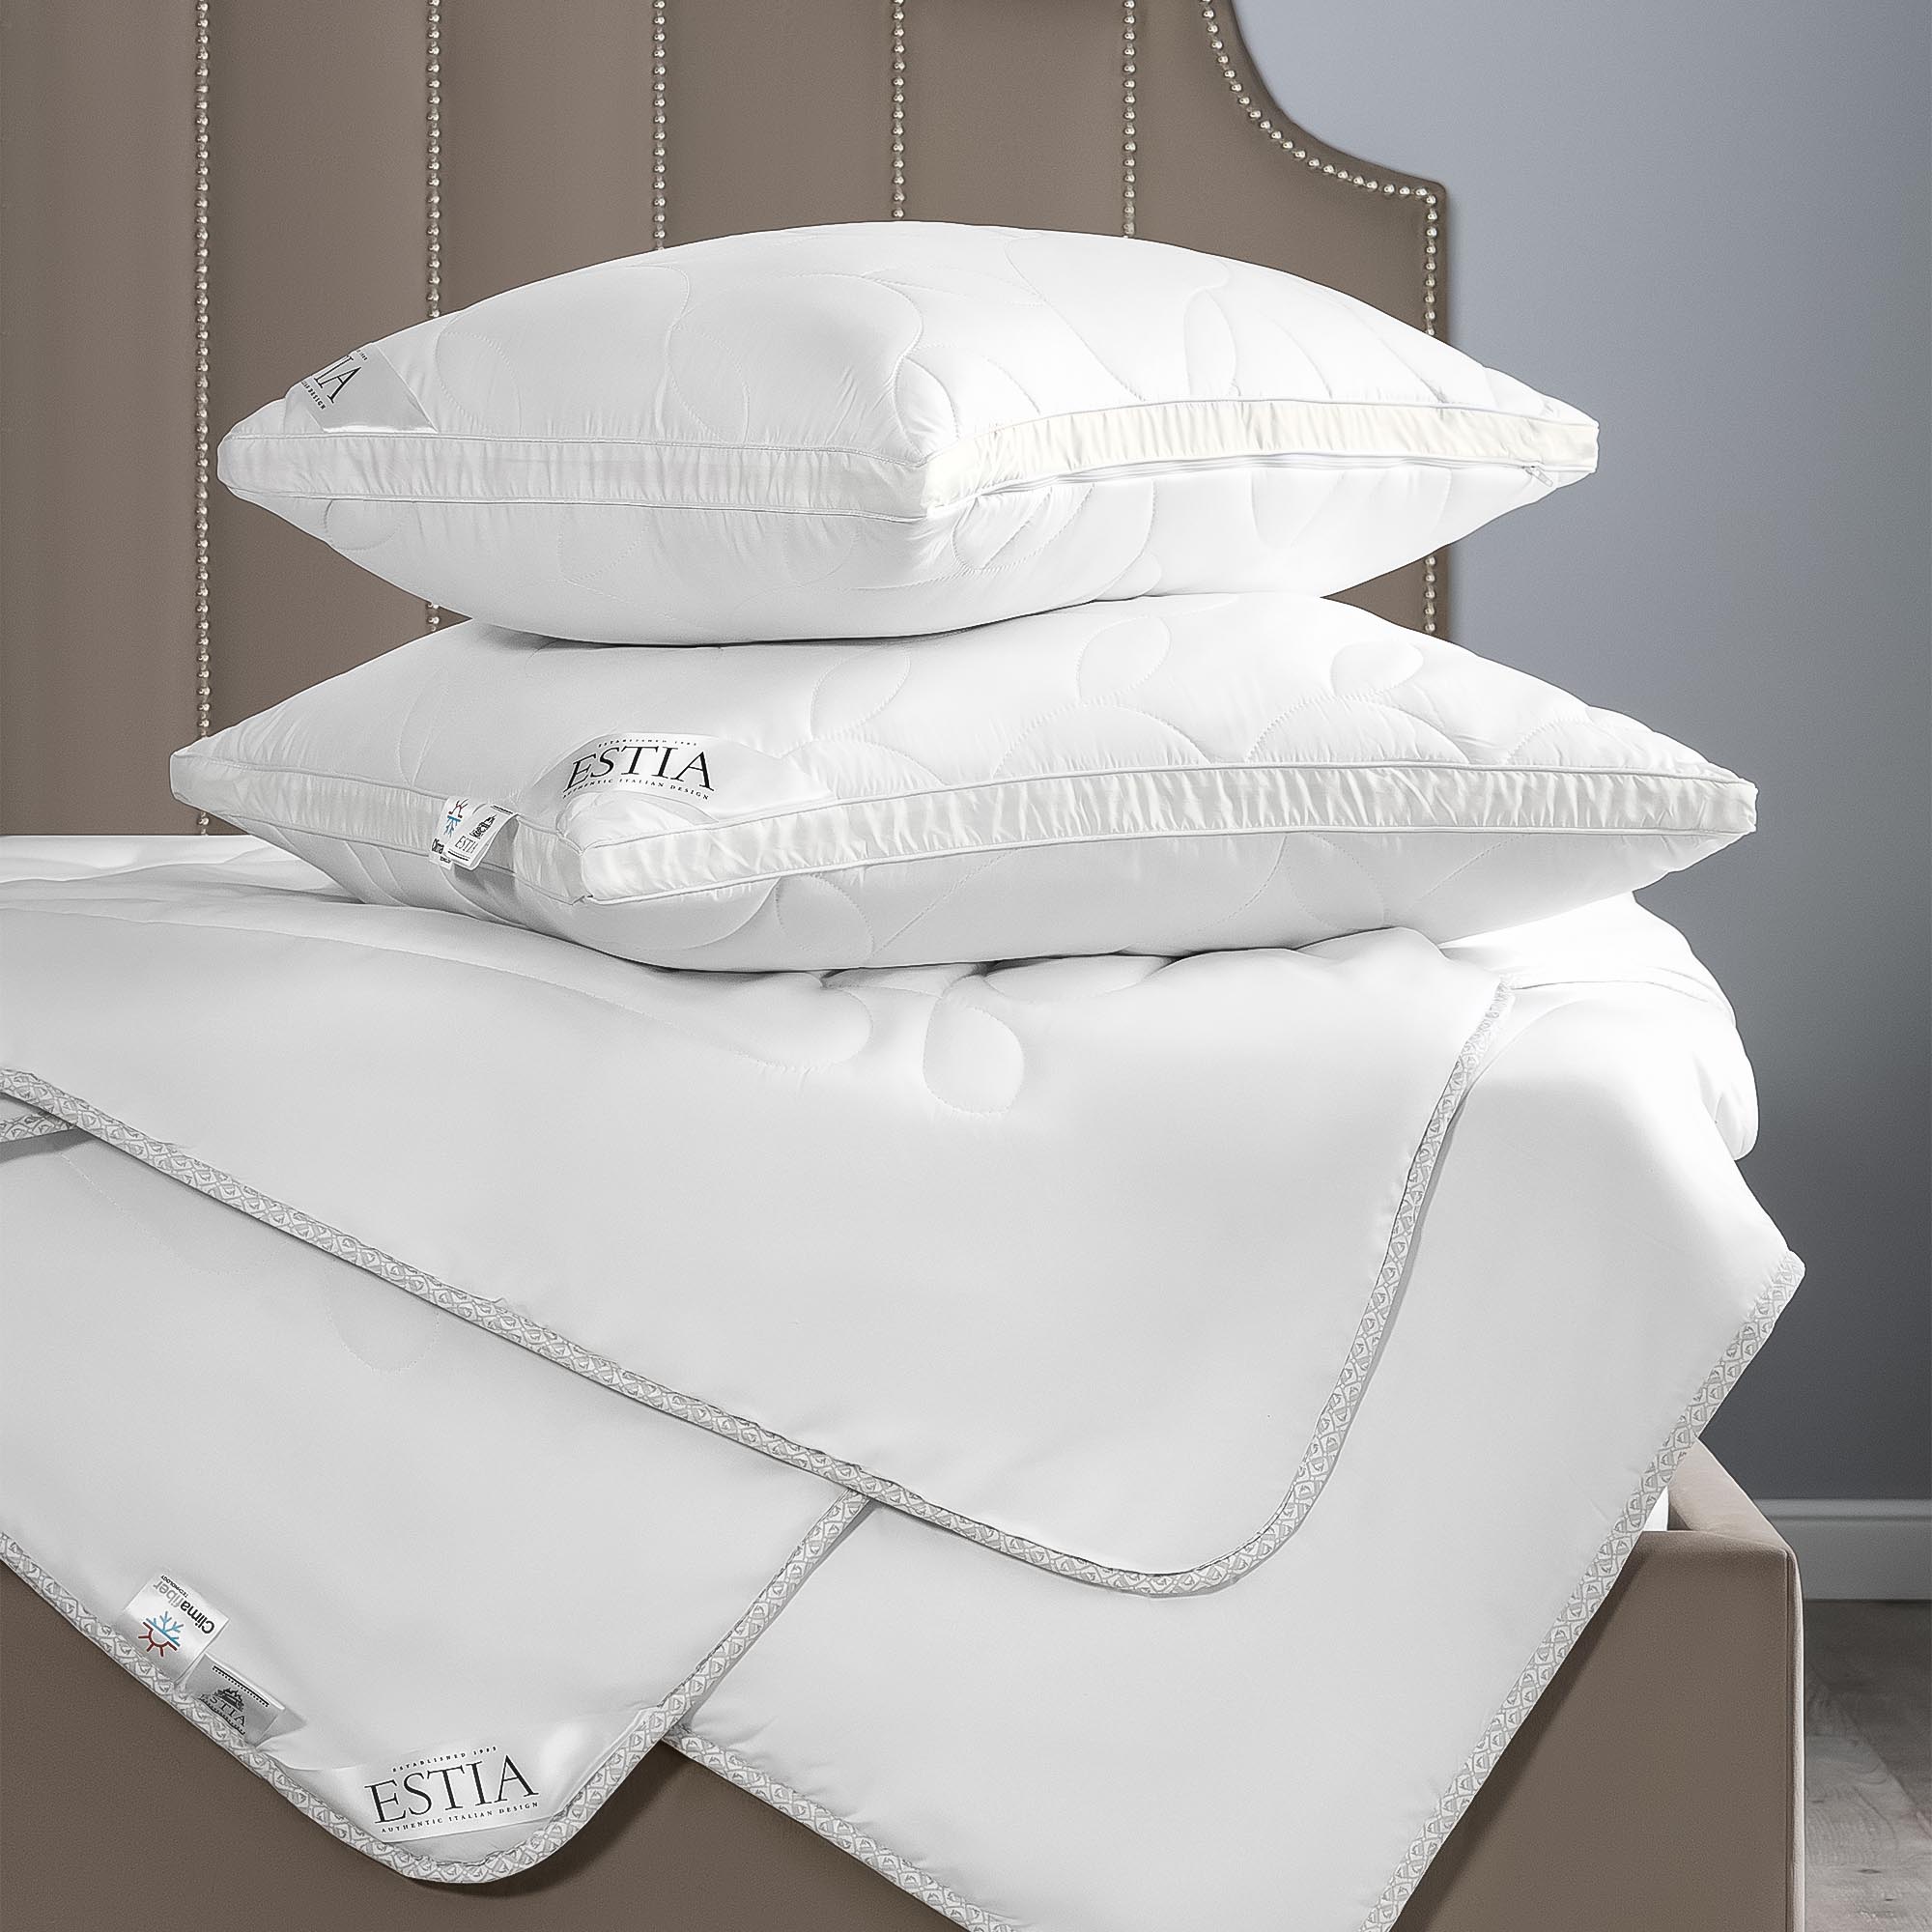 Одеяло легкое Estia Фальтерона 140х200, размер 140х200 см - фото 4